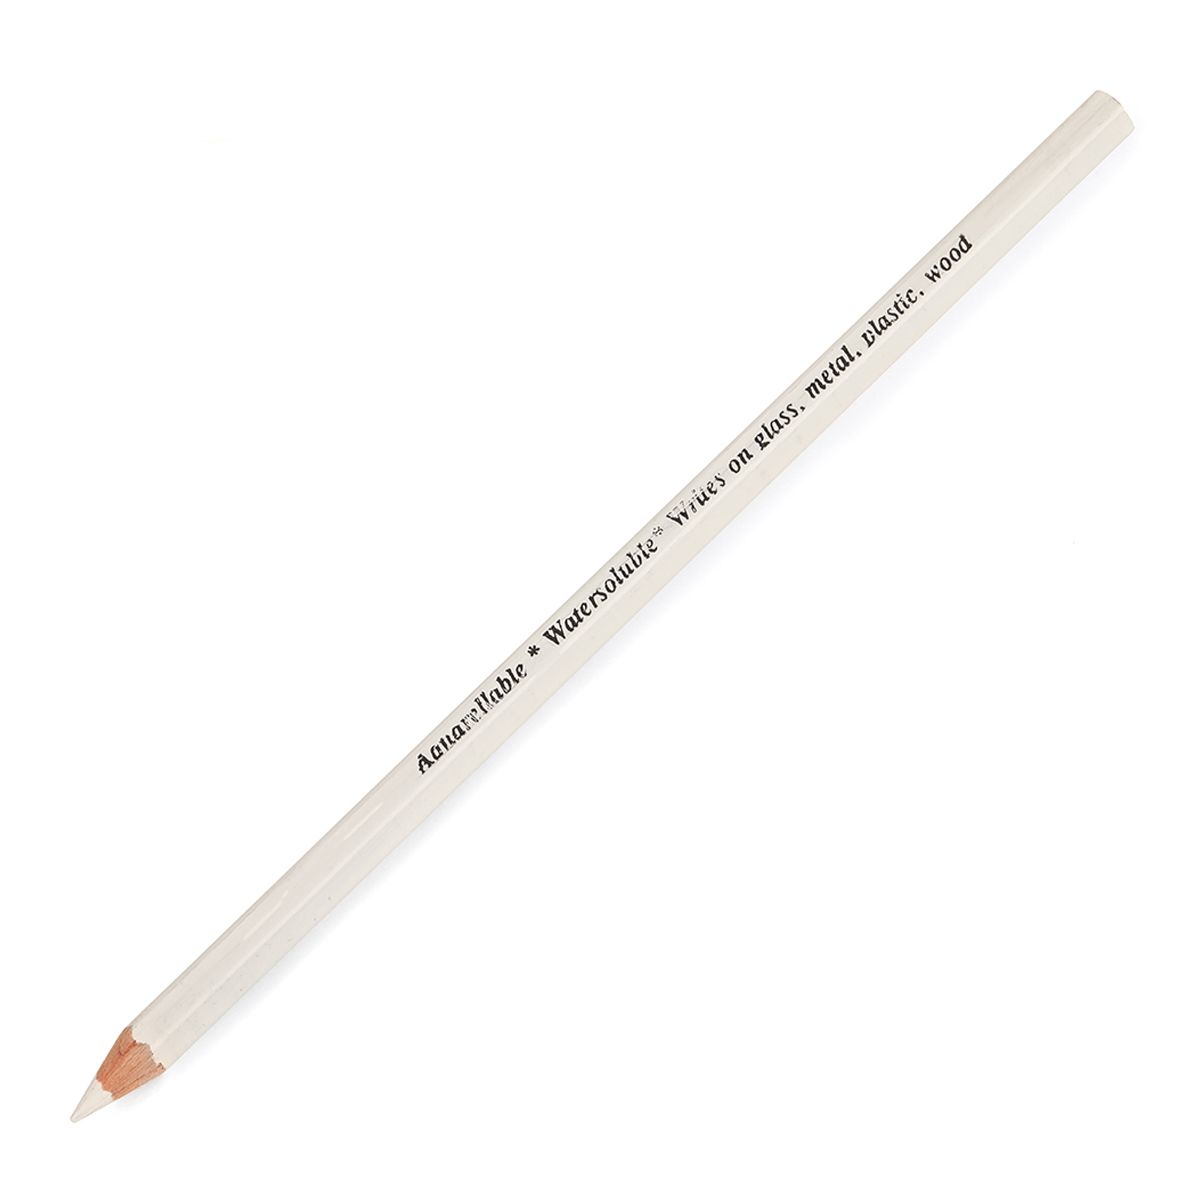 General's Scribe All Pencil - White